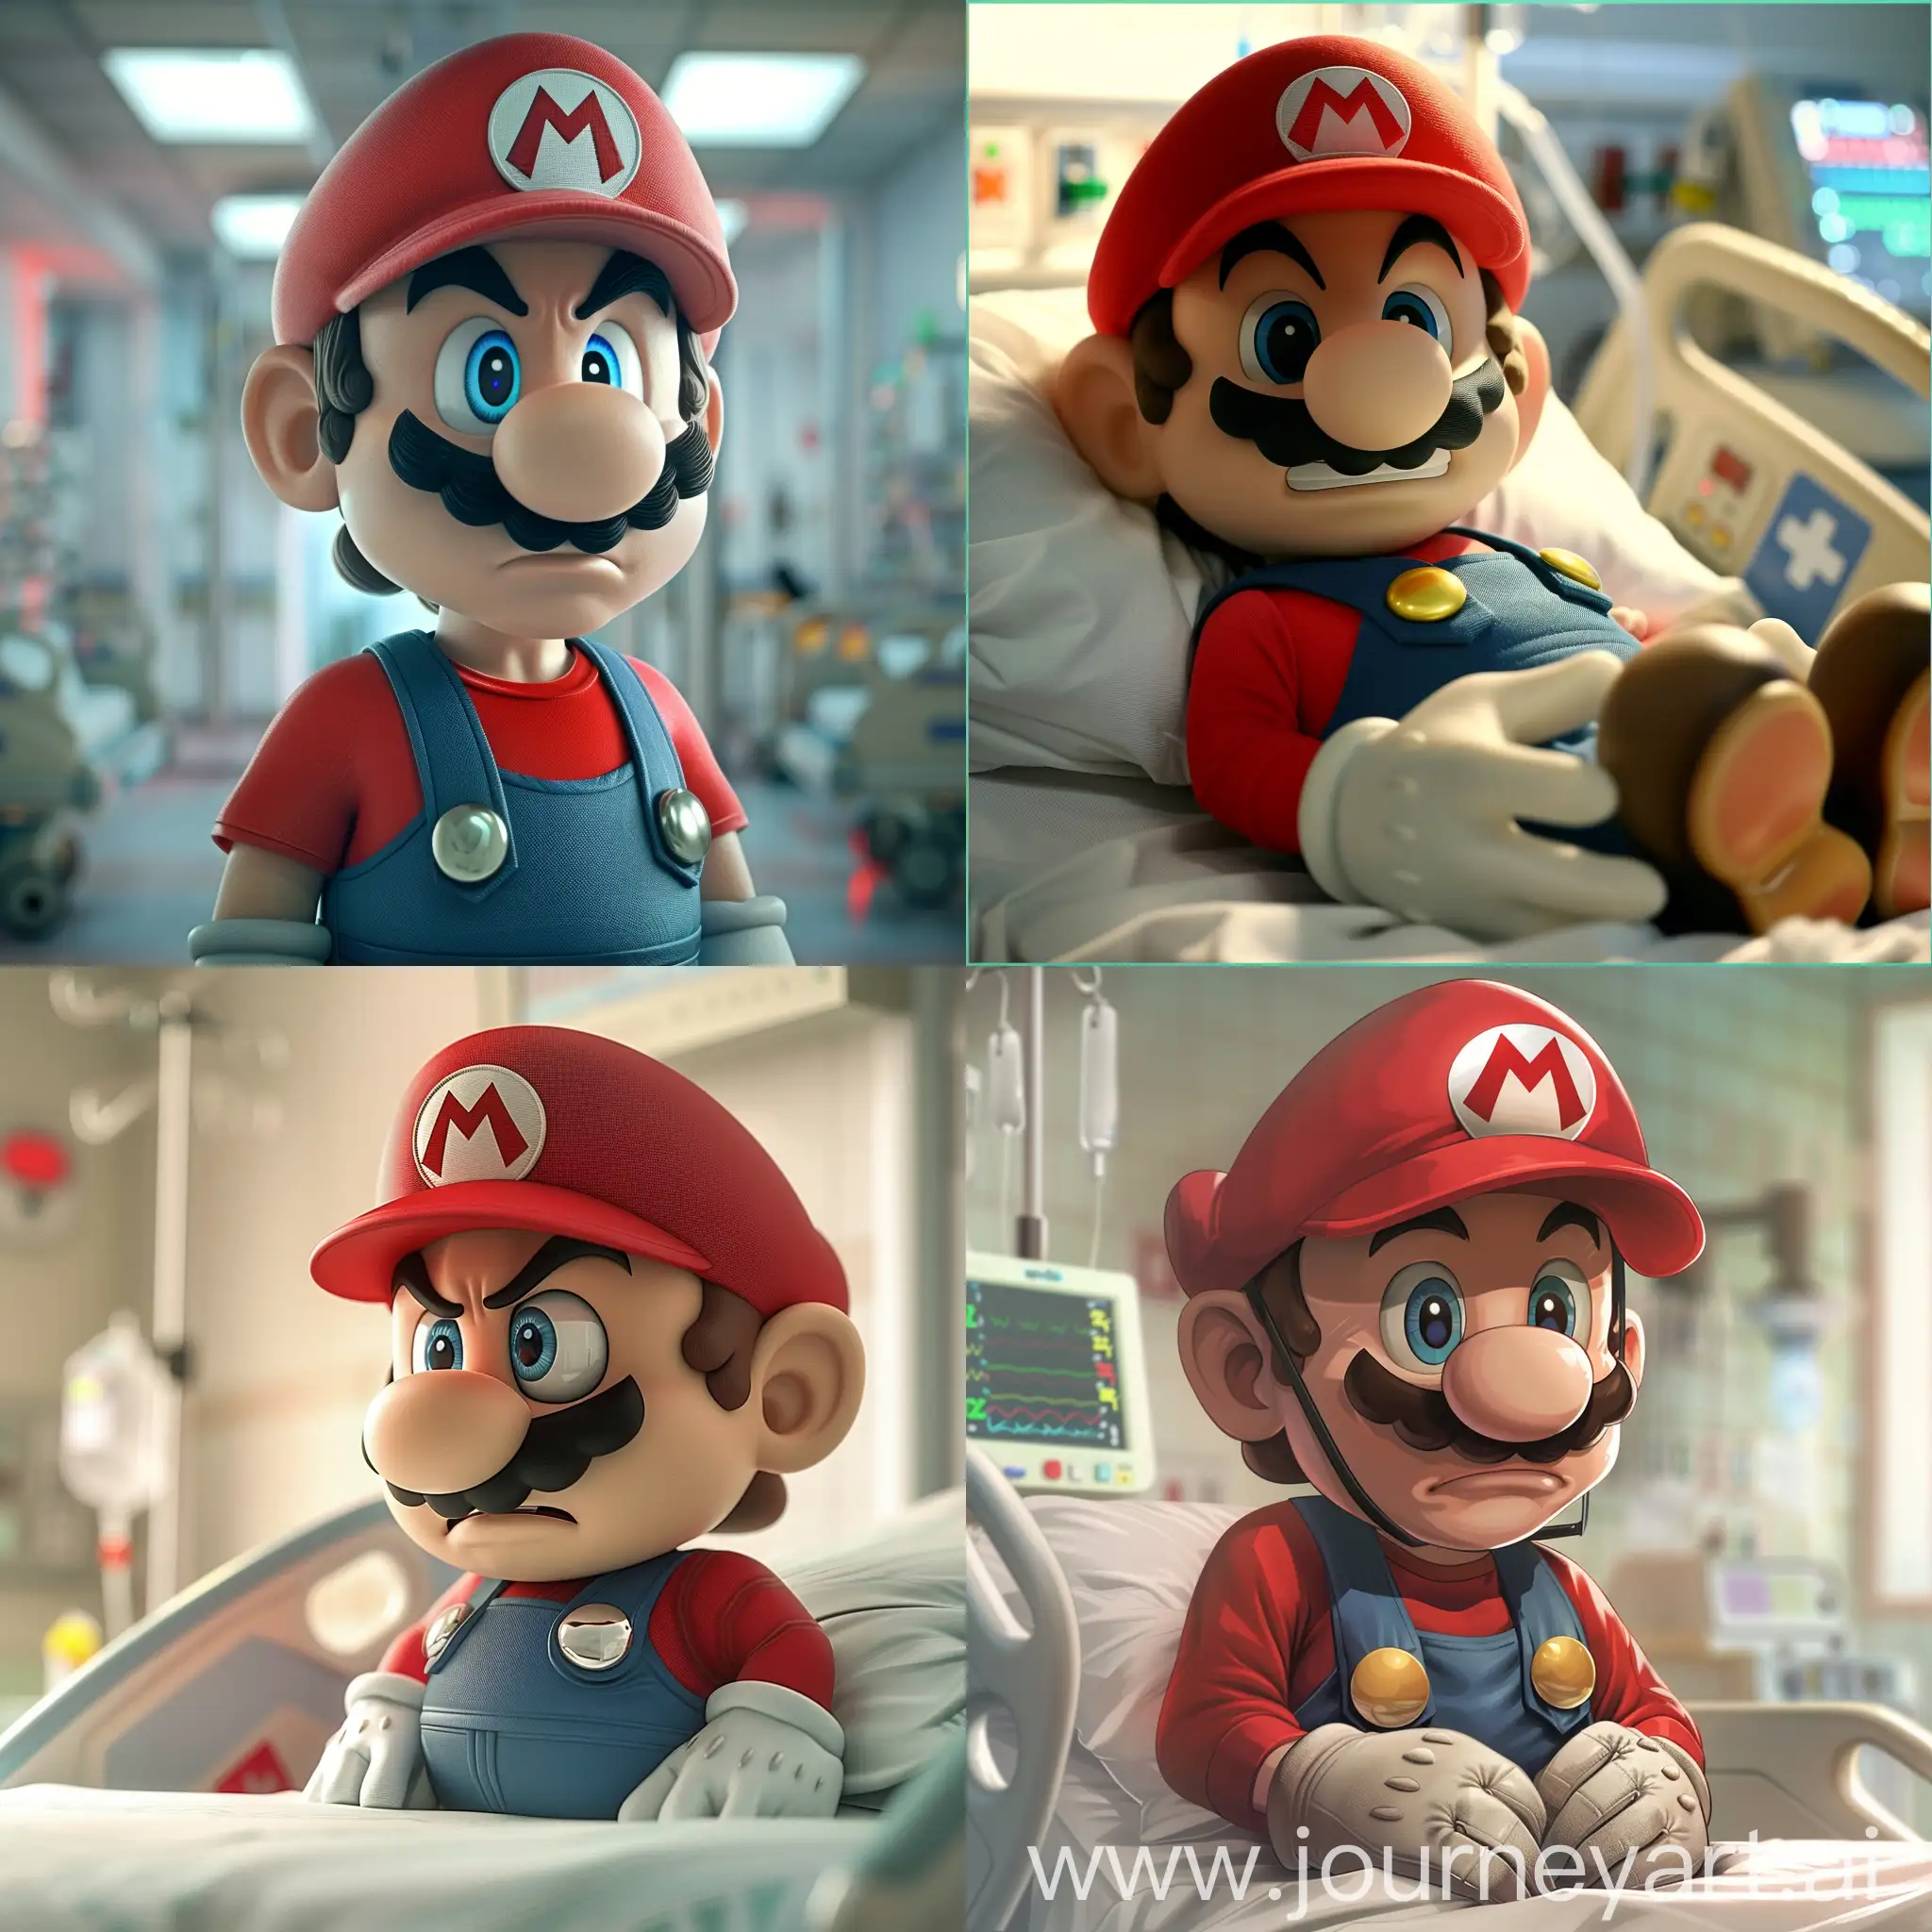 Super-Mario-Hospitalized-with-Sadness-Battling-Disease